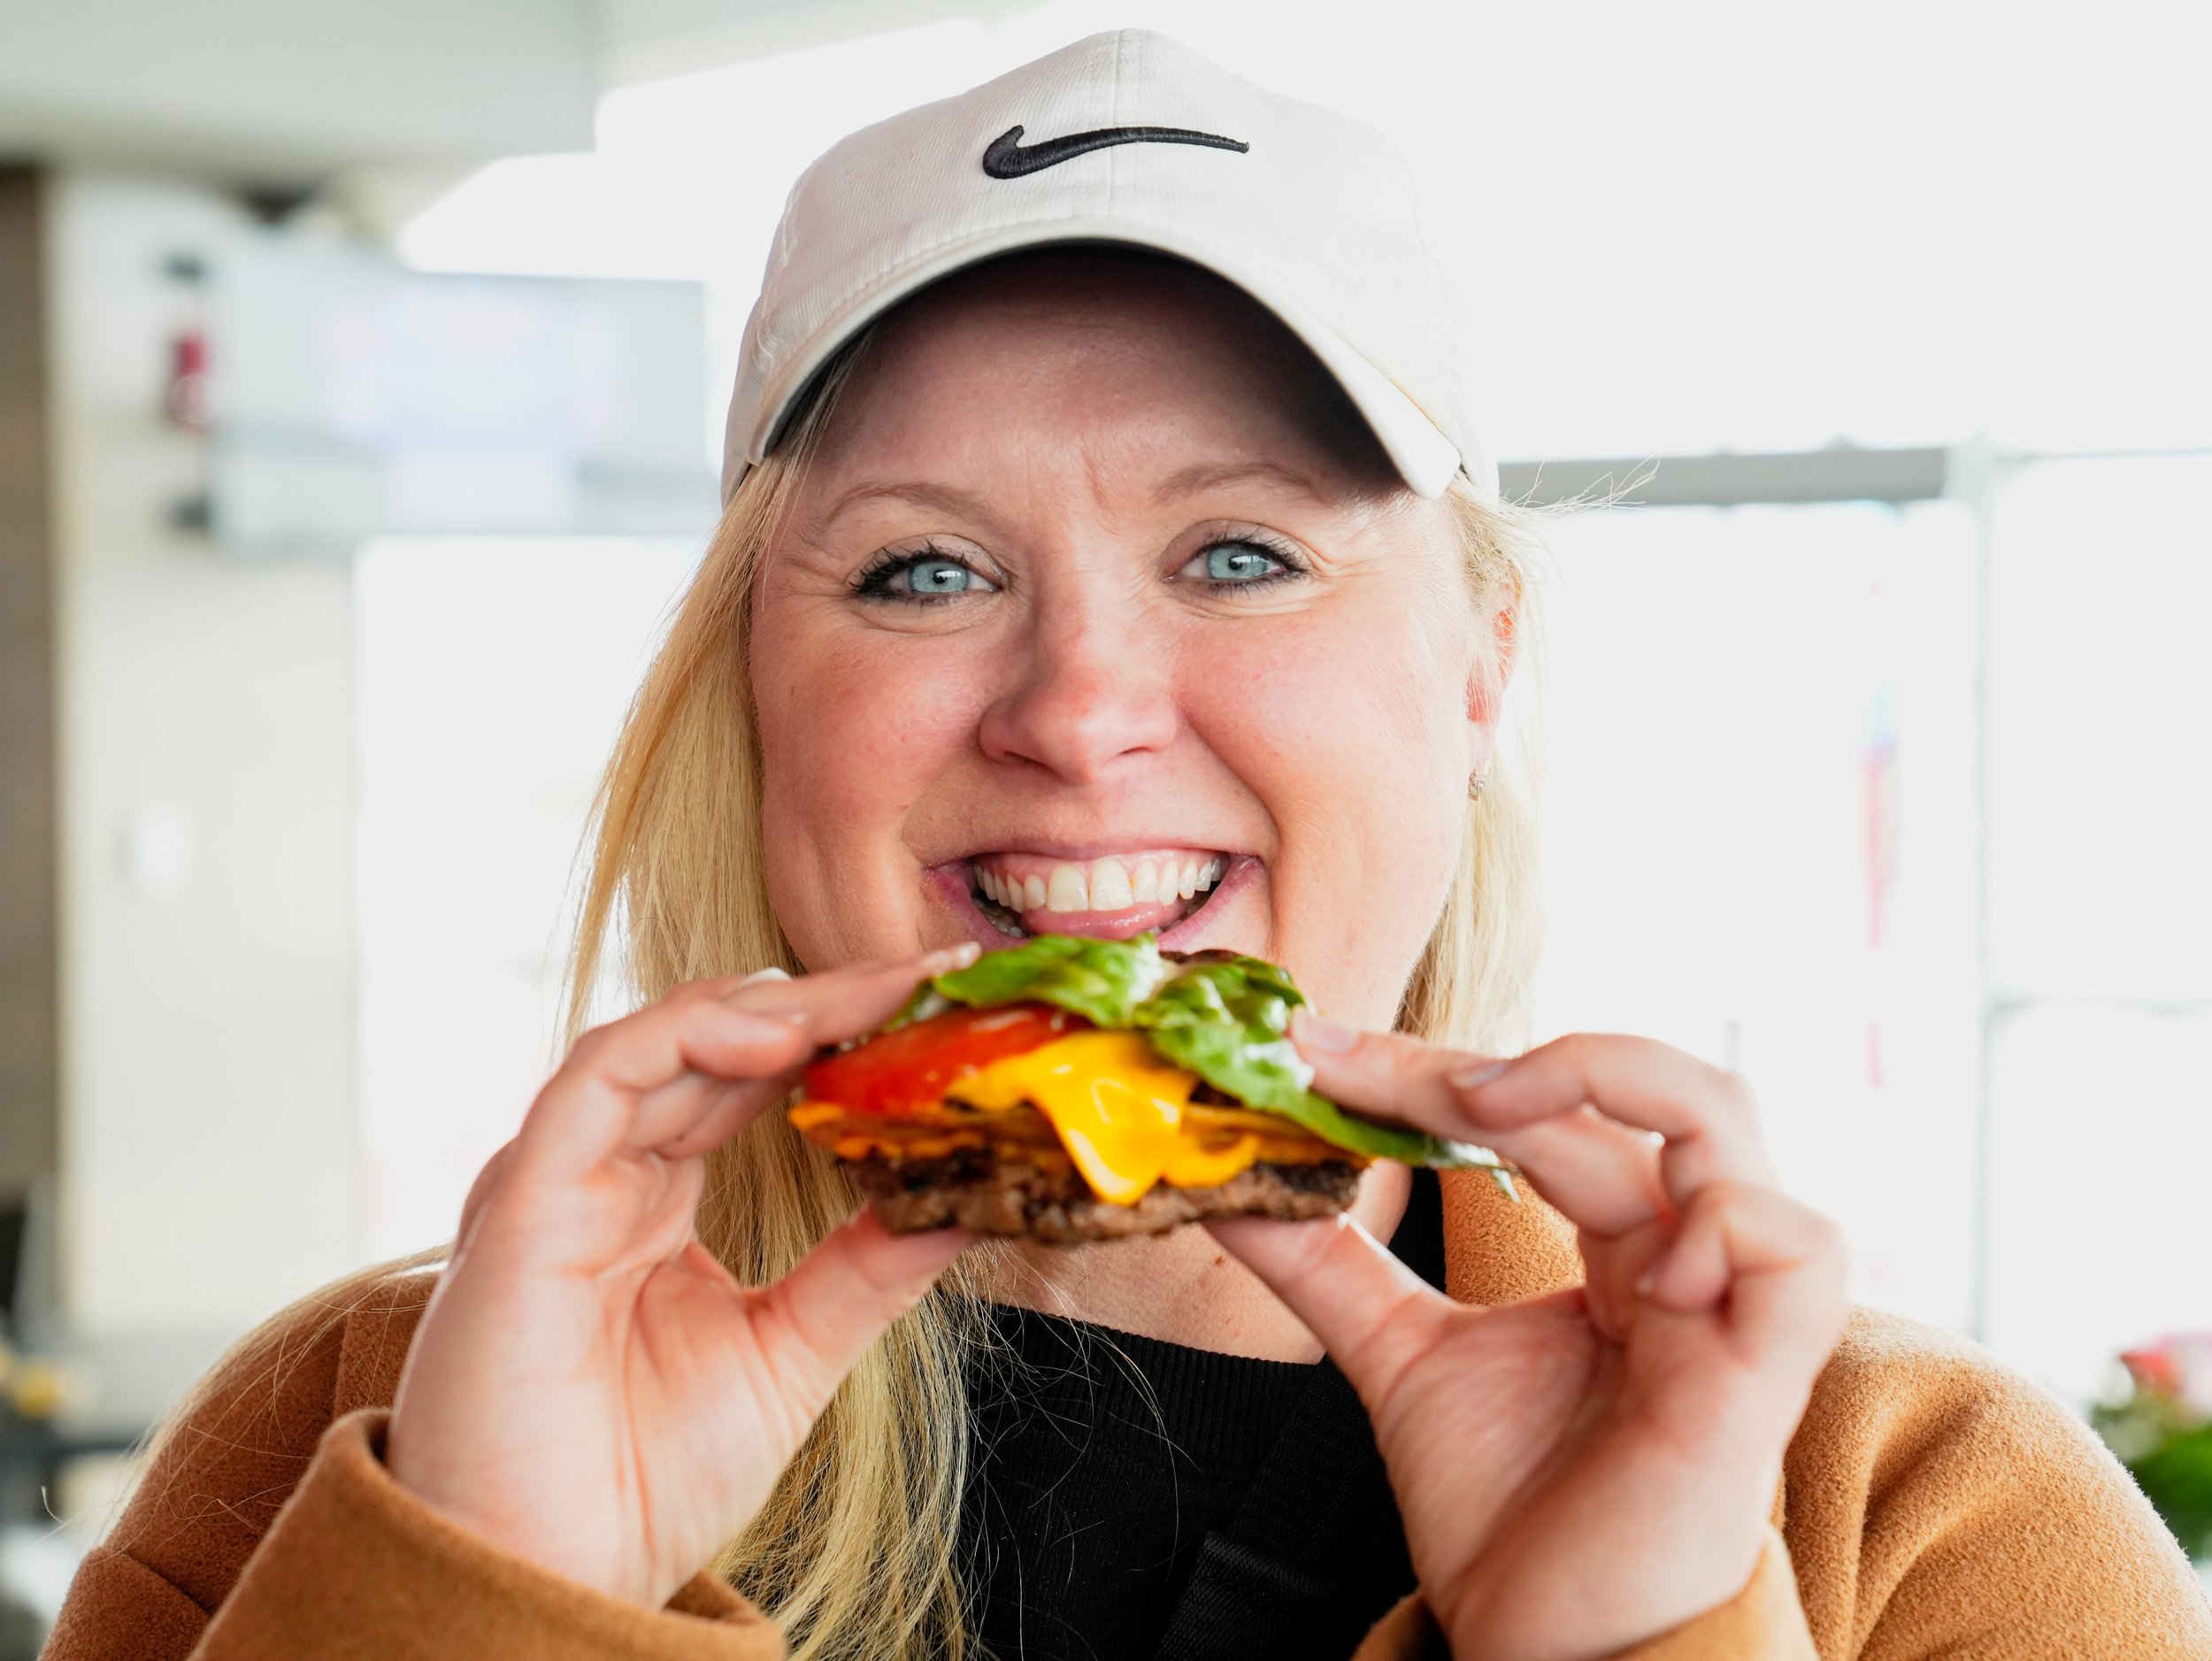 Lauren's Favorite:  The Loaded Nacho Burger